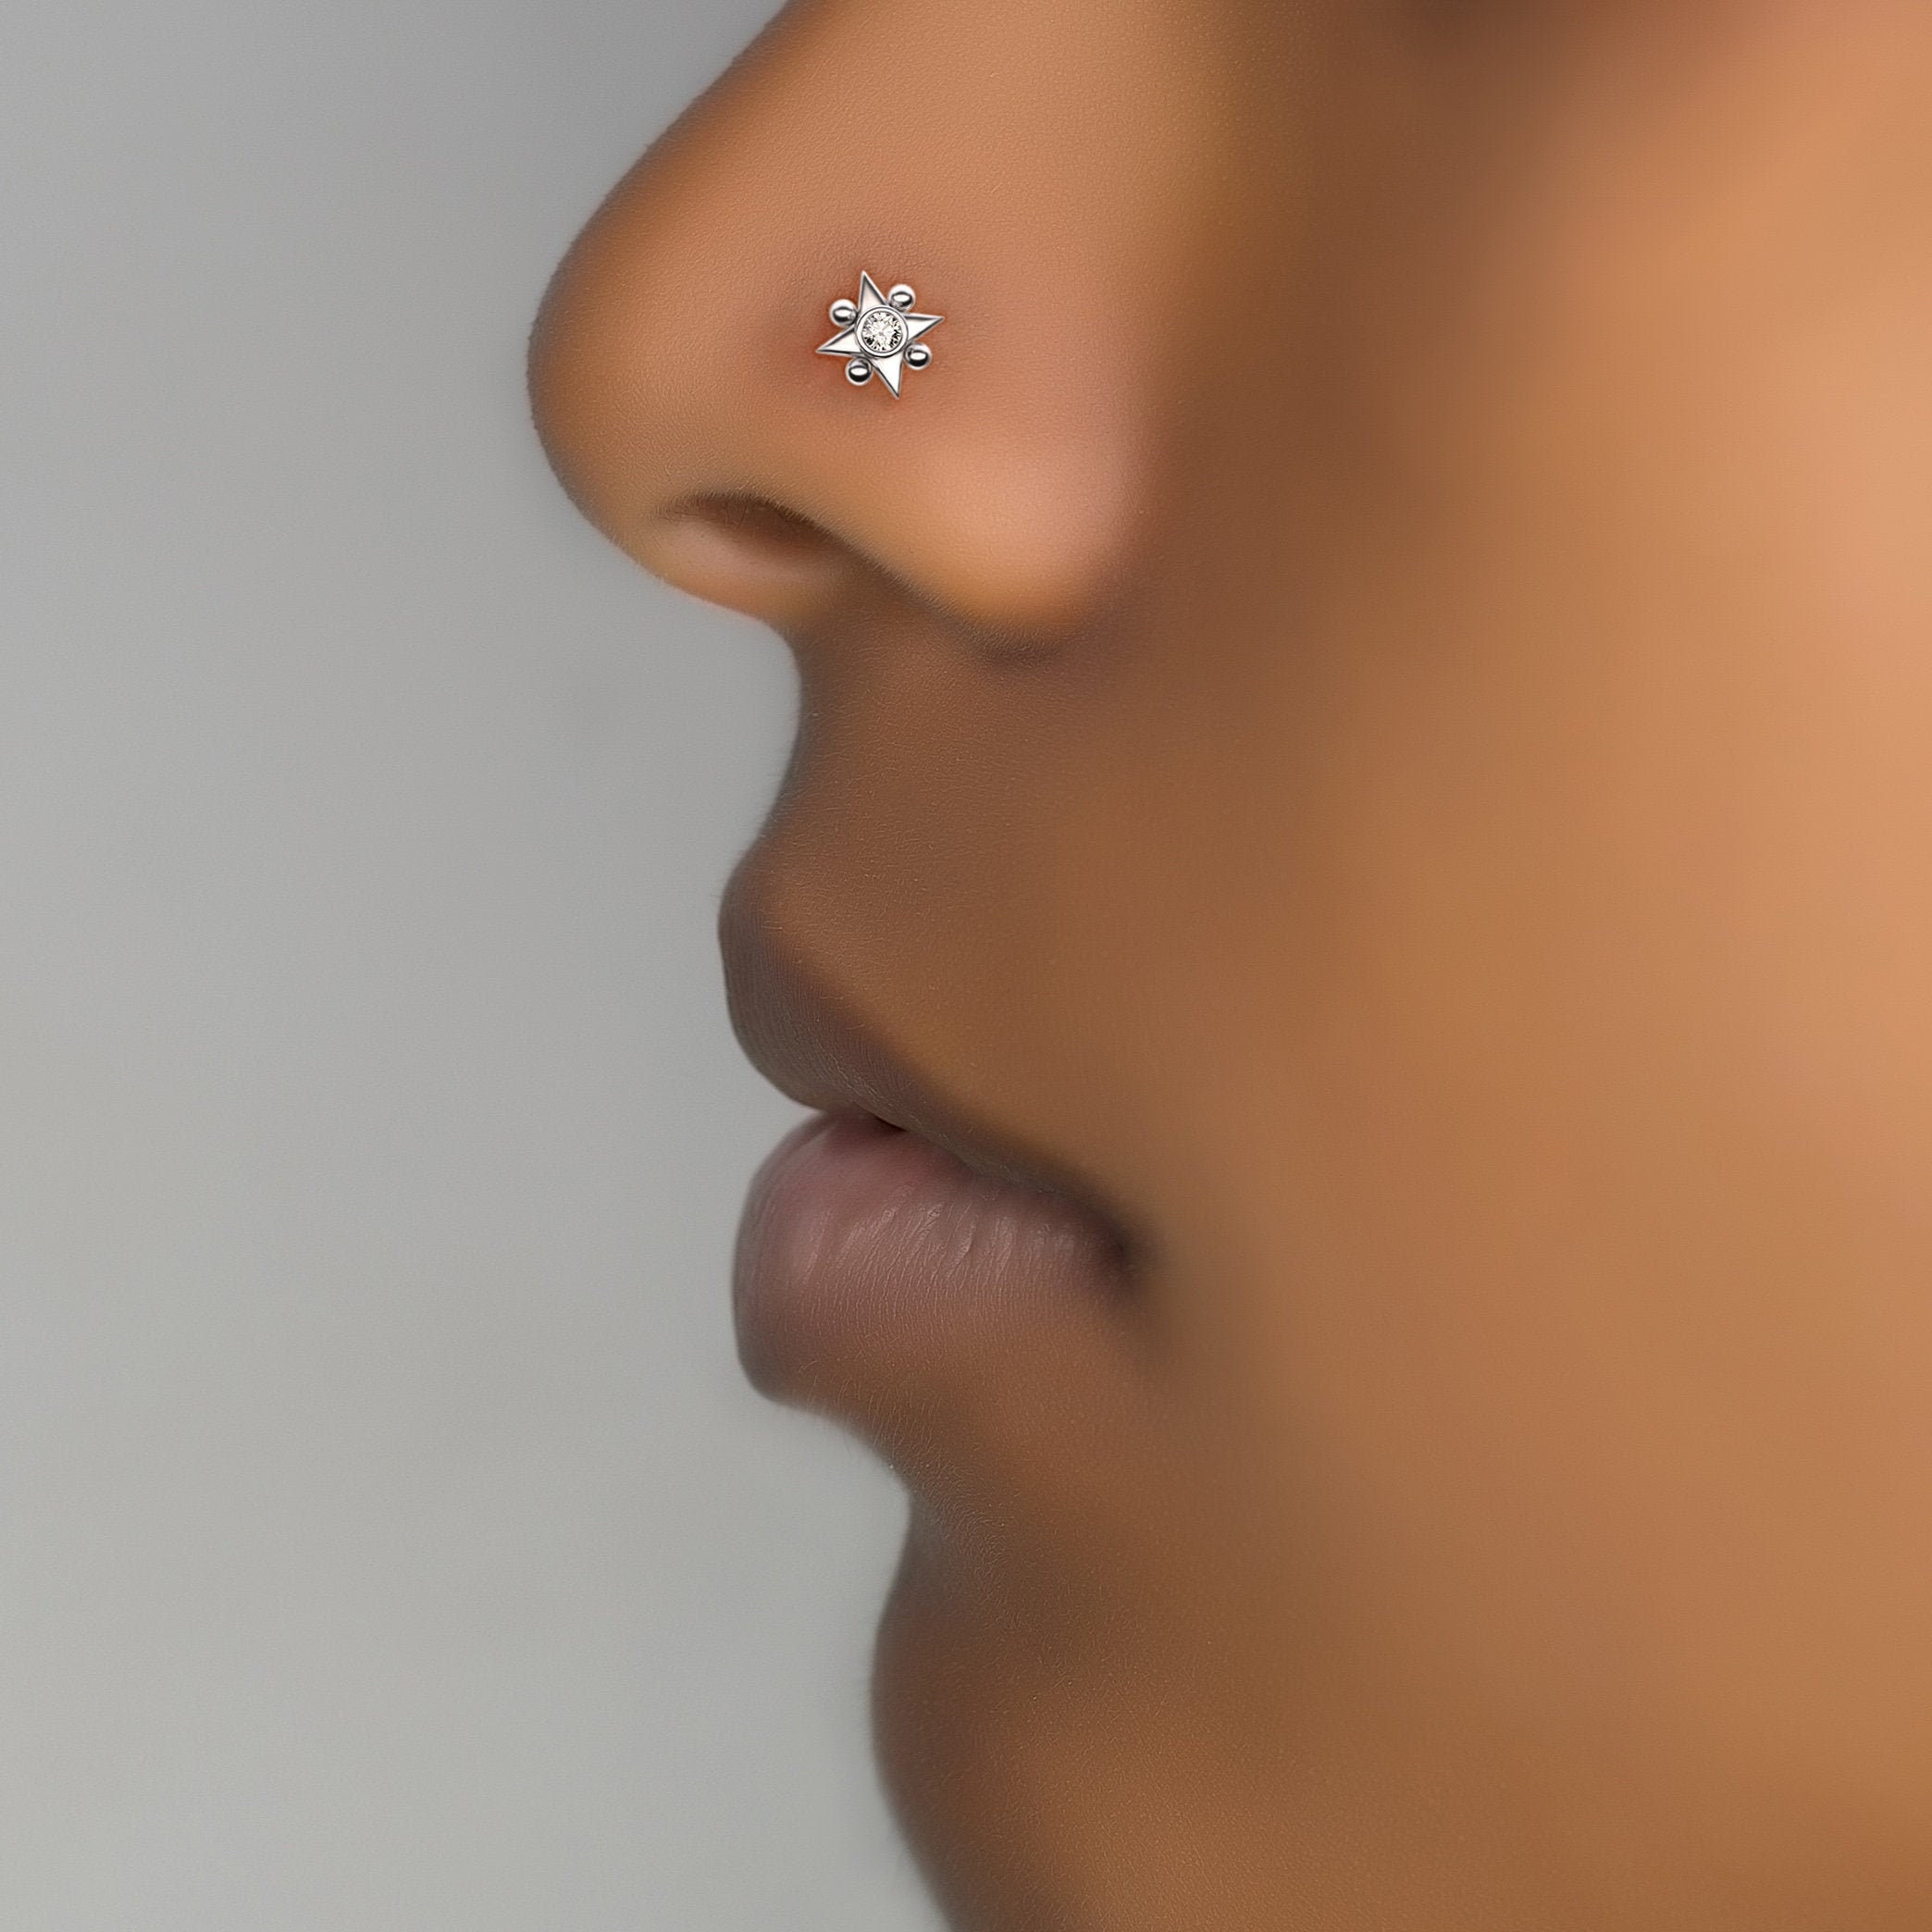 Body Jewelry Lead Crystal Stainless Steel Flower Nose Stud Trio -  Walmart.com